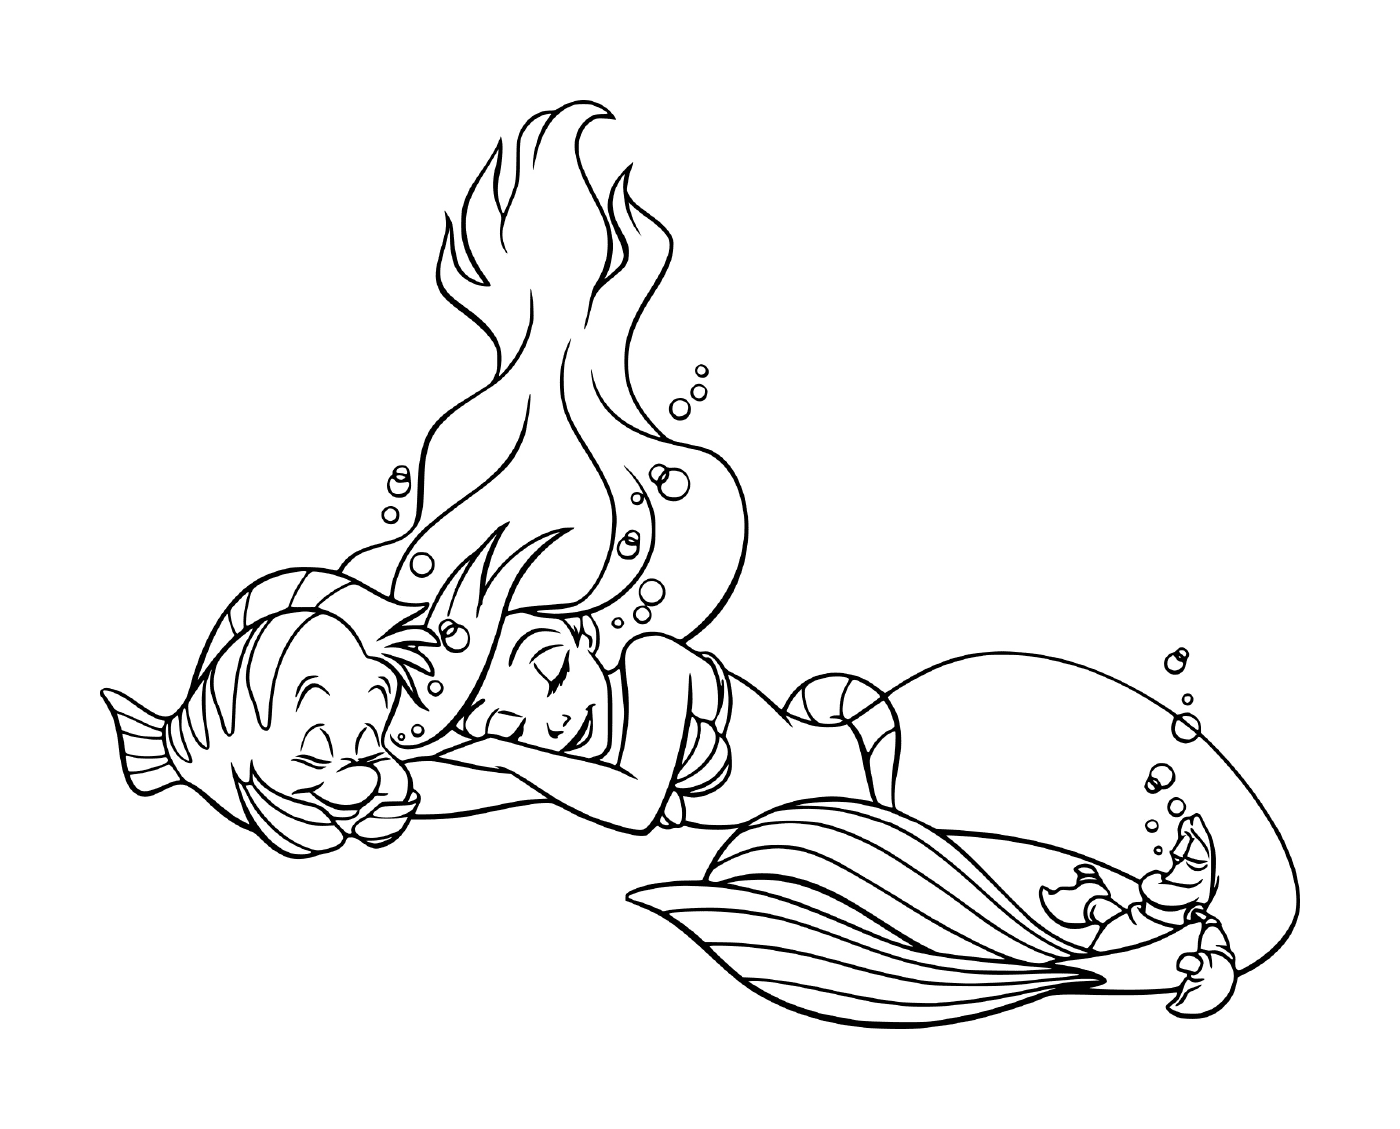  Ariel de La Petite Meerjungfrau schläft 